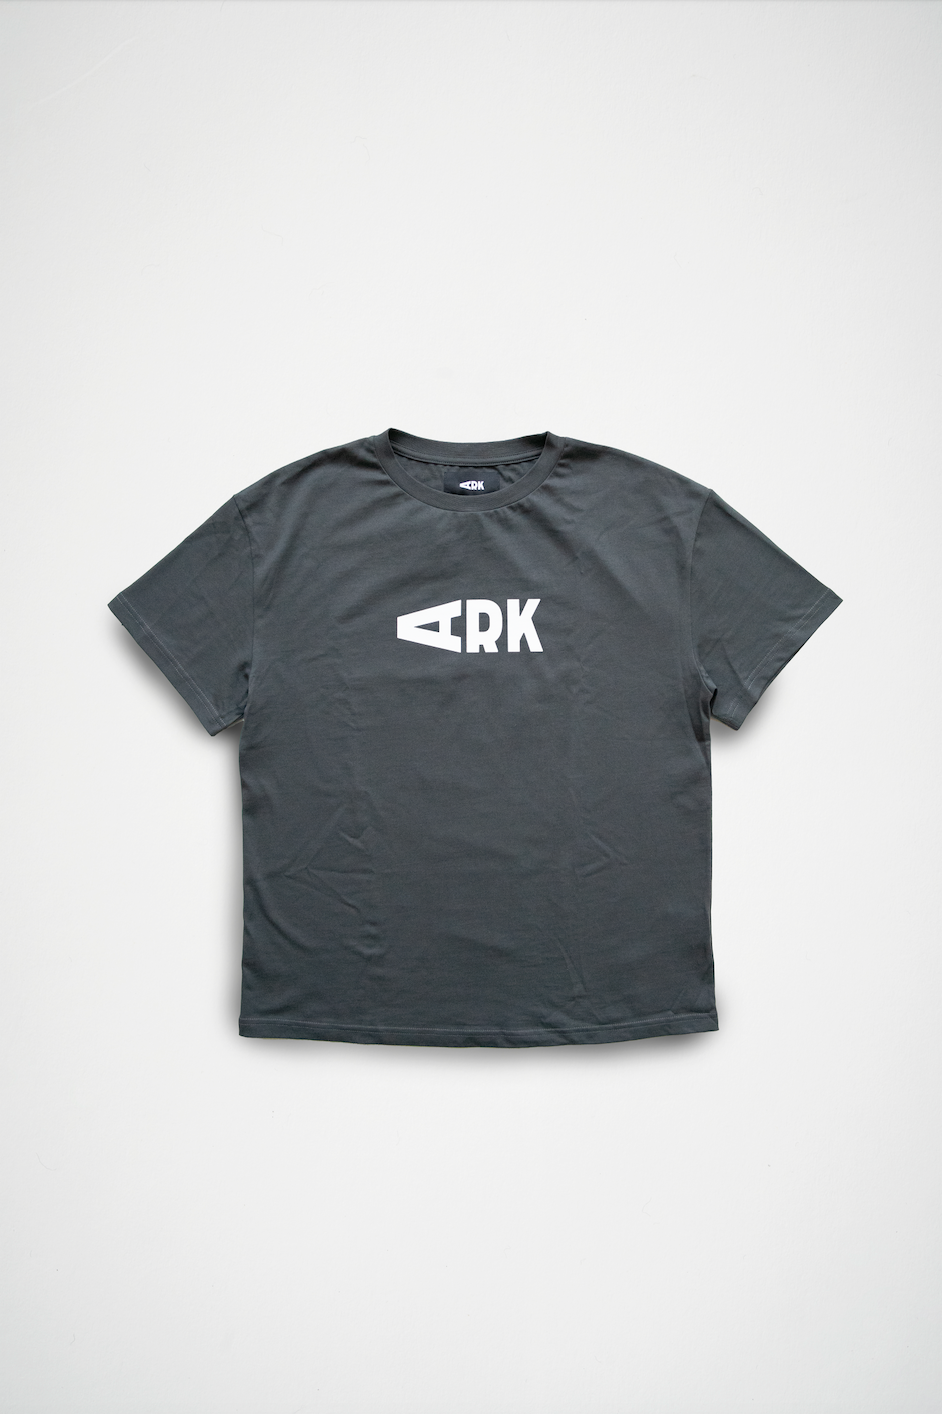 ARK TRIBE Premium T-Shirt Archipelago Proven Oyster Black